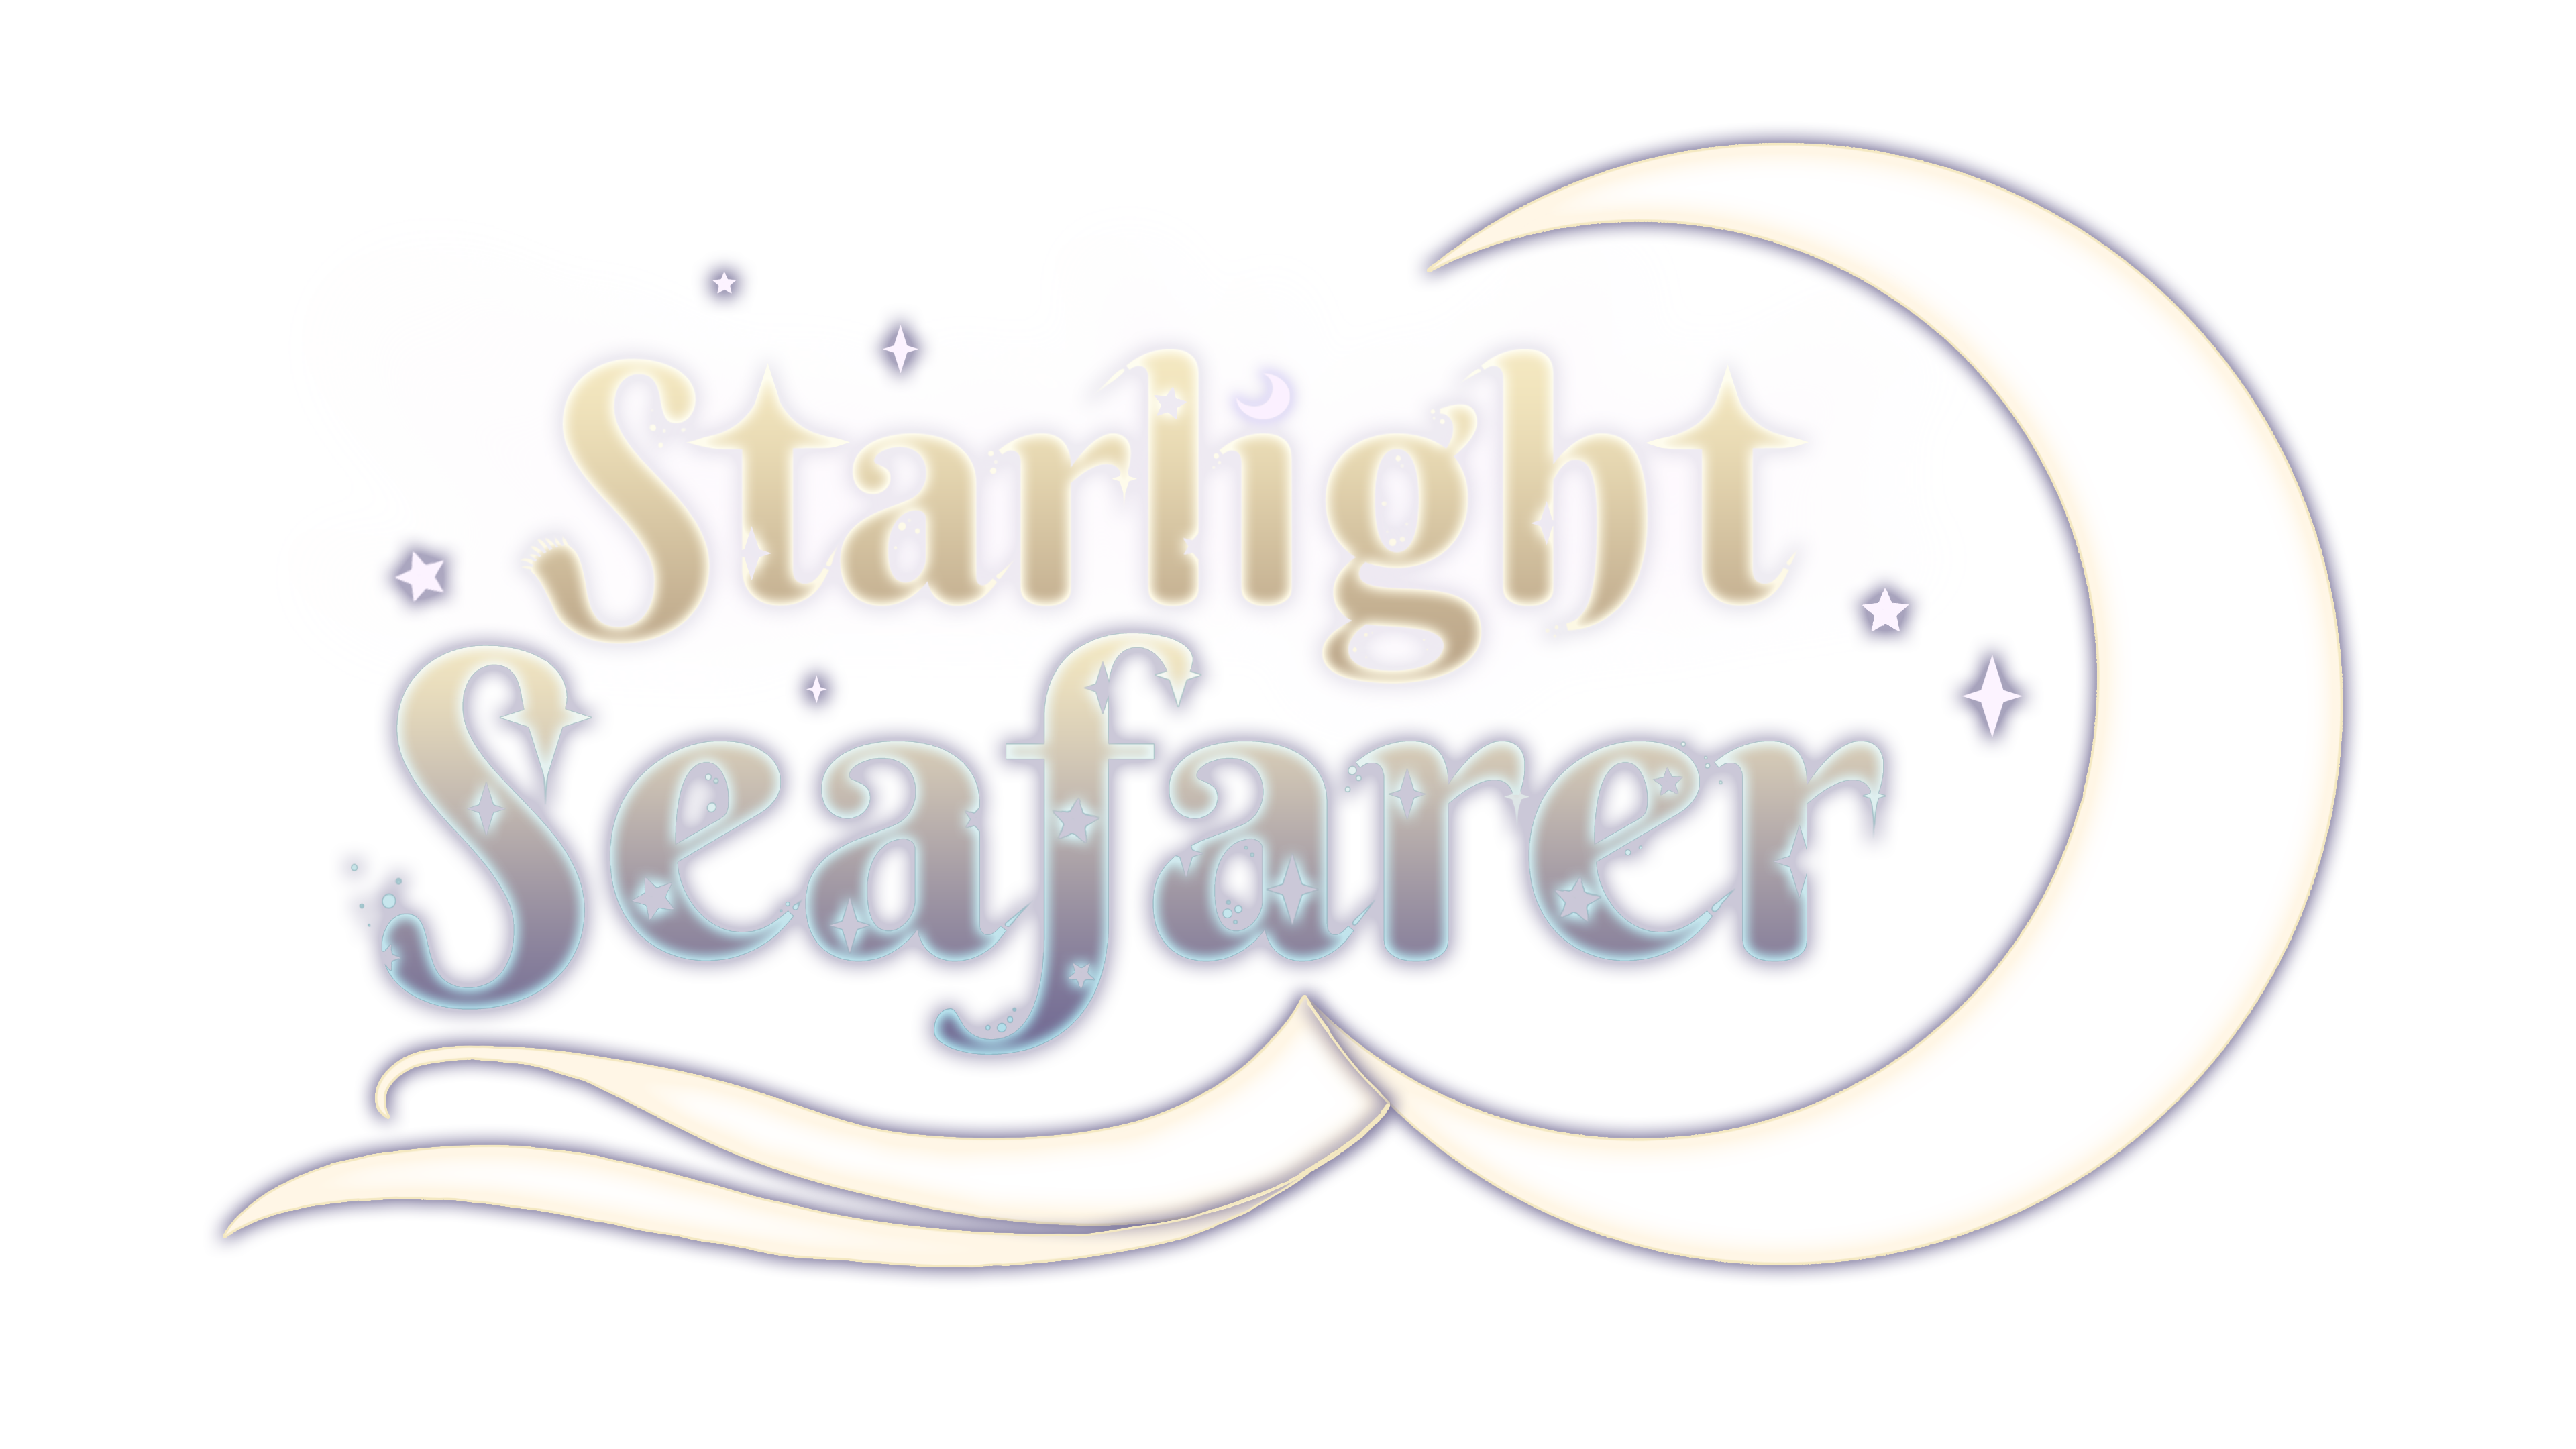 Starlight Seafarer